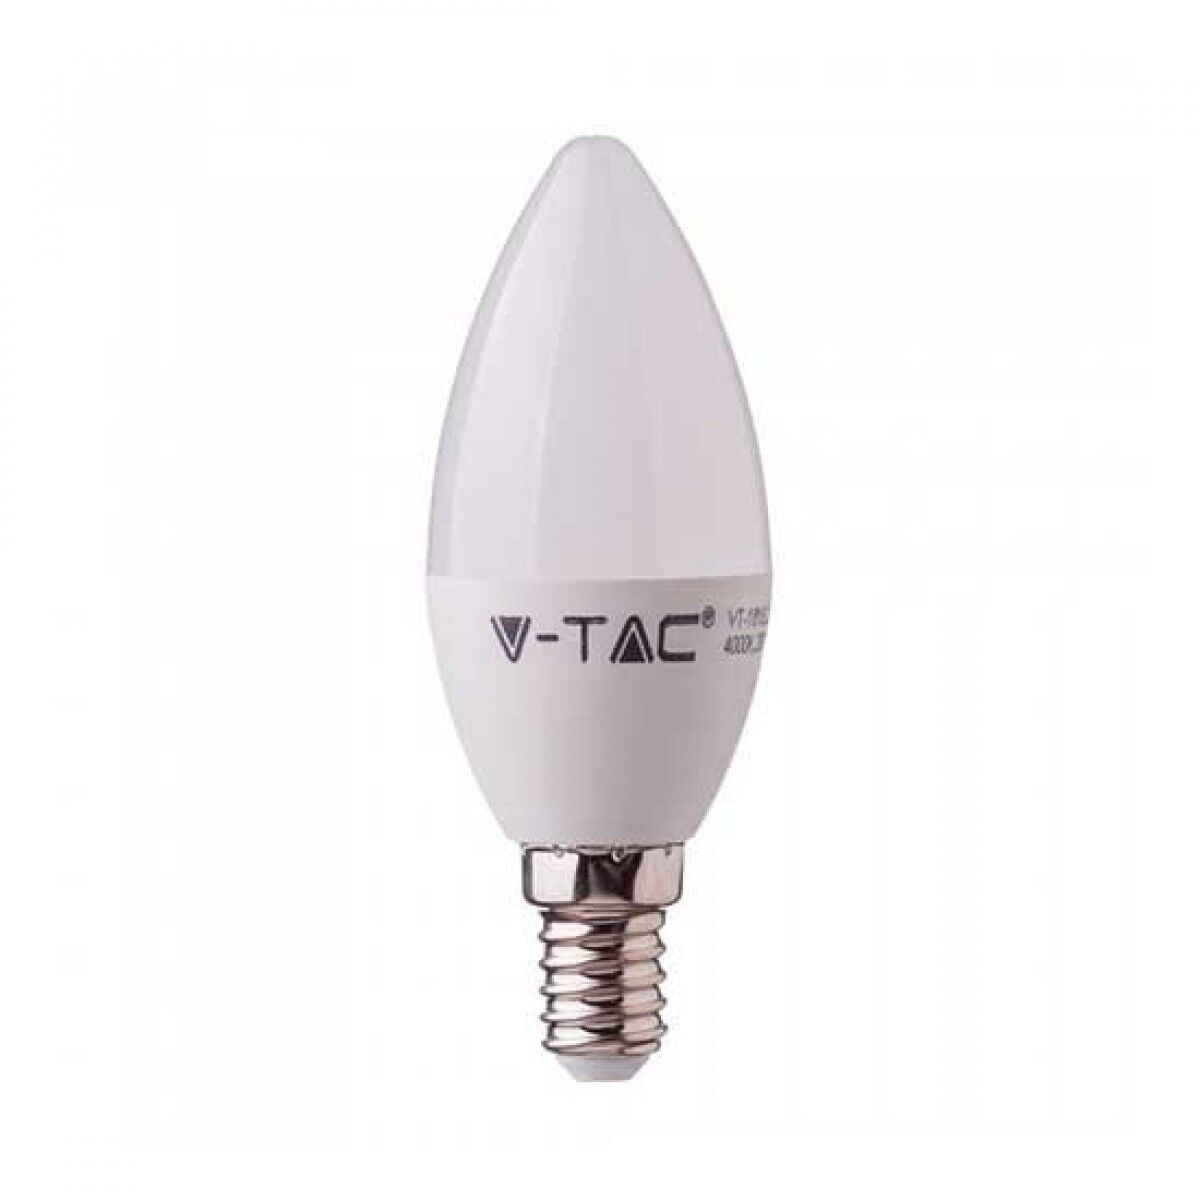 V-Tac Vt-255 Lampada Led Chip Samsung 4,5w E14 Candela Bianco Freddo 6400k - Sku 260